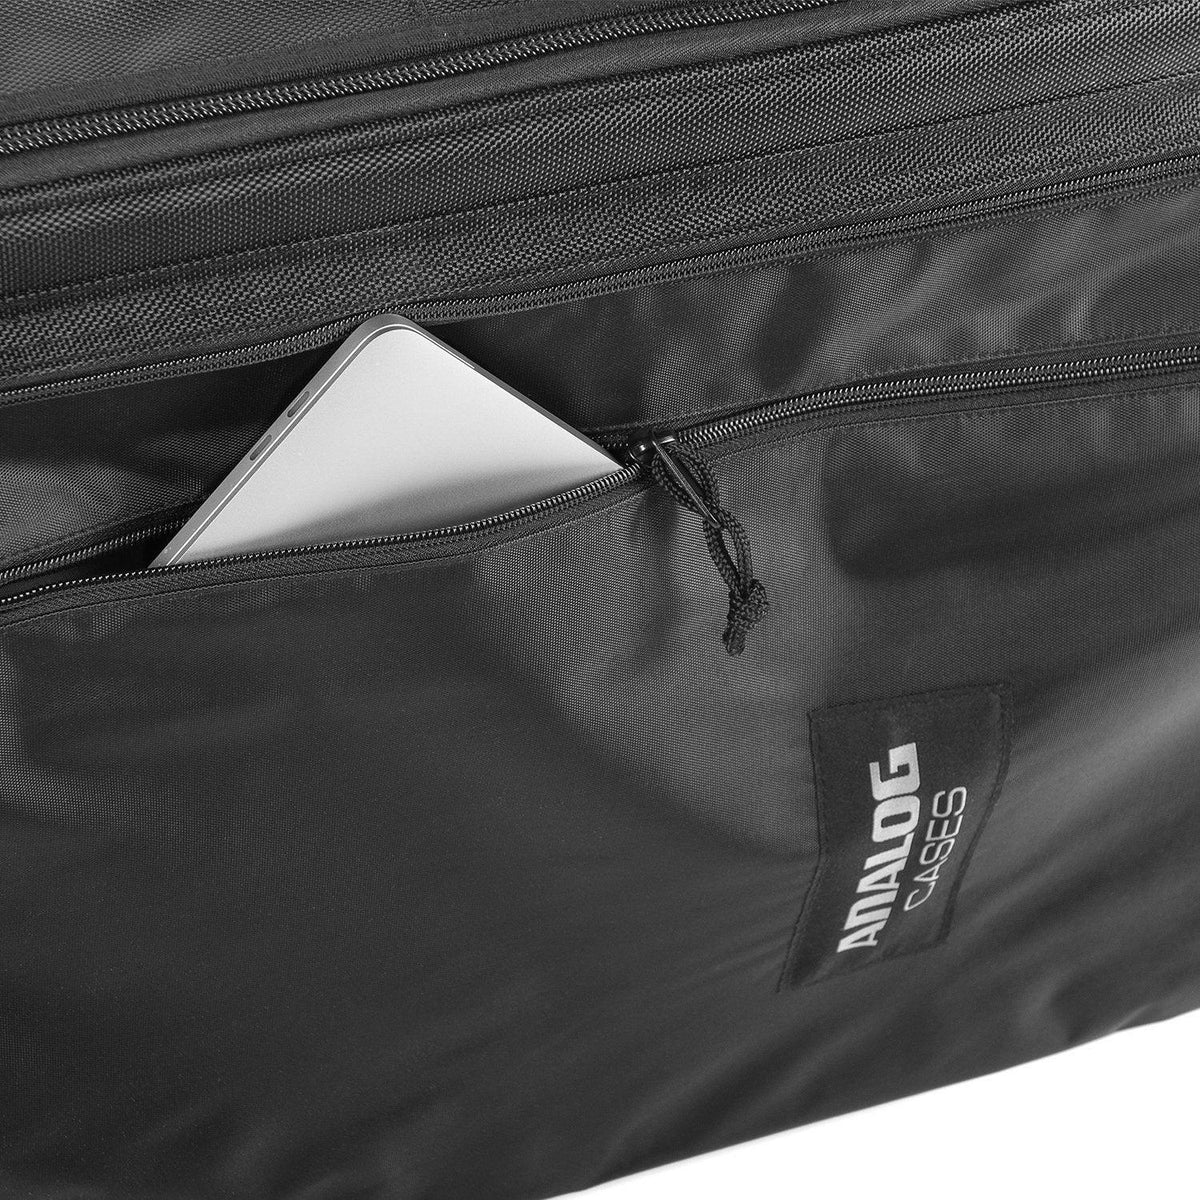 Analog Cases Mobile Producer Backpack